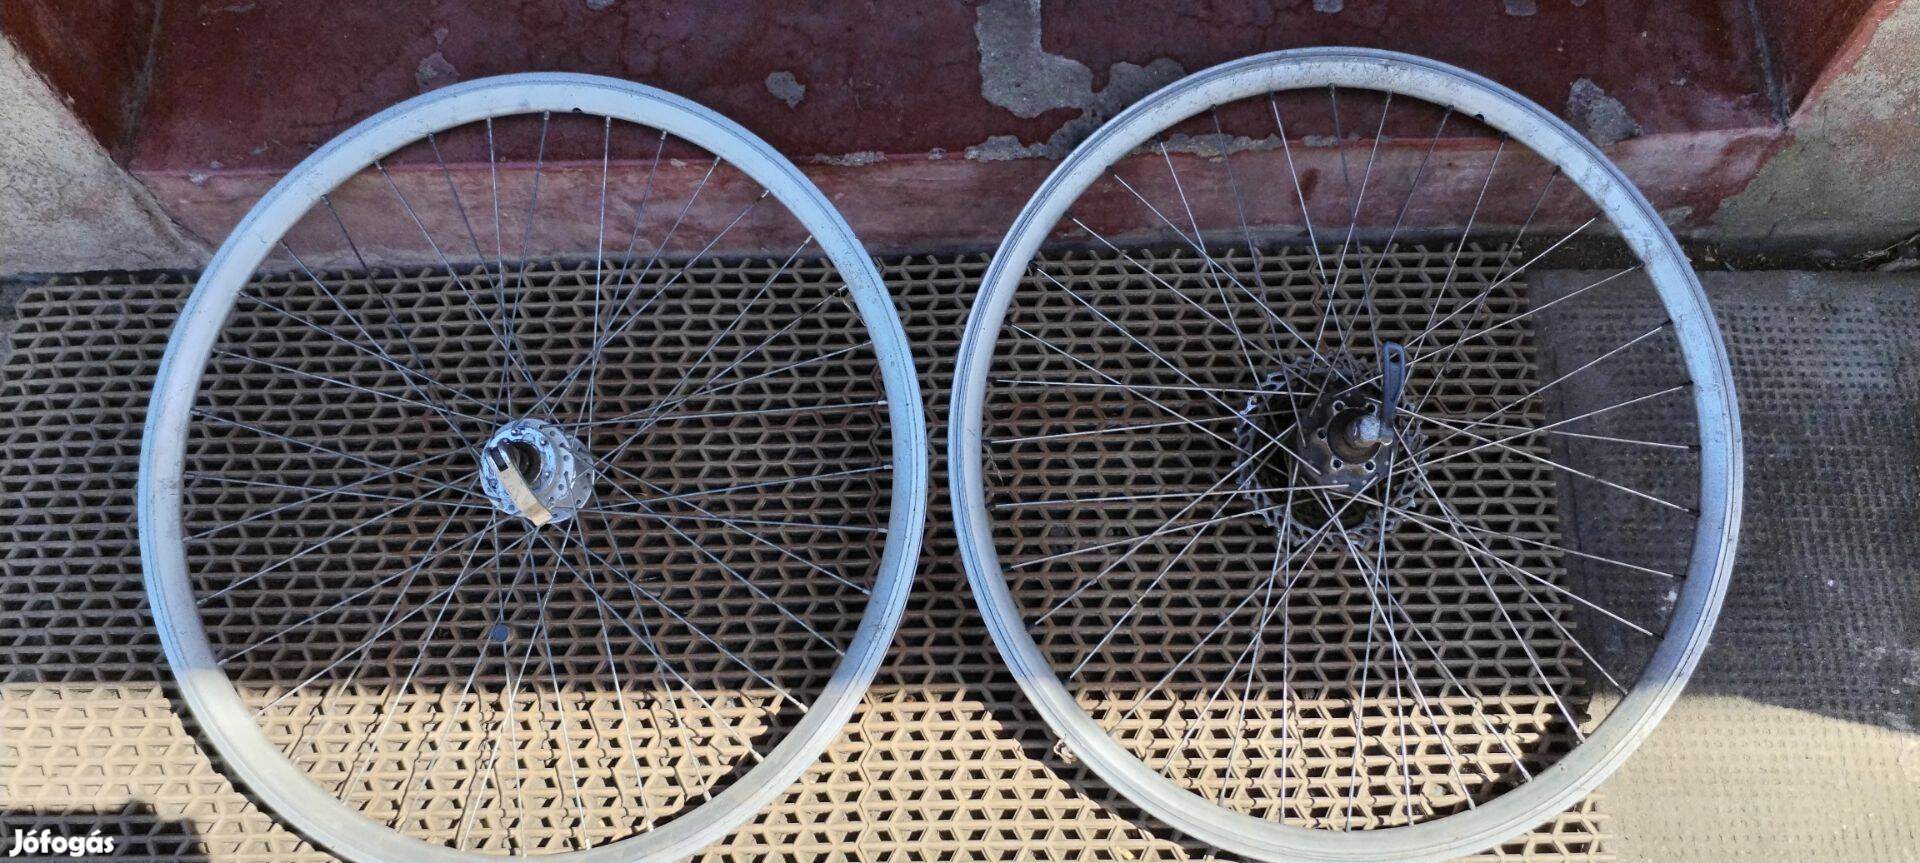 1pár(első-hátsó)26"-os duplafalú kerékpár bicikli kerék